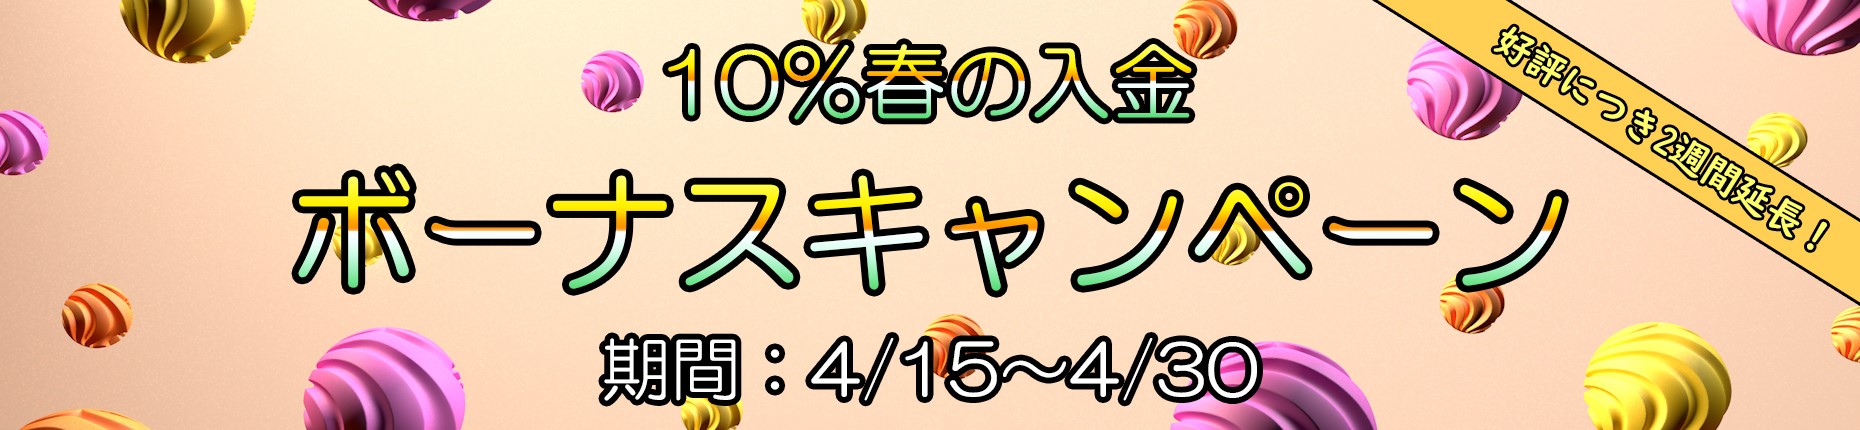 【FXDD】春の10%入金ボーナスキャンペーン【延長中】